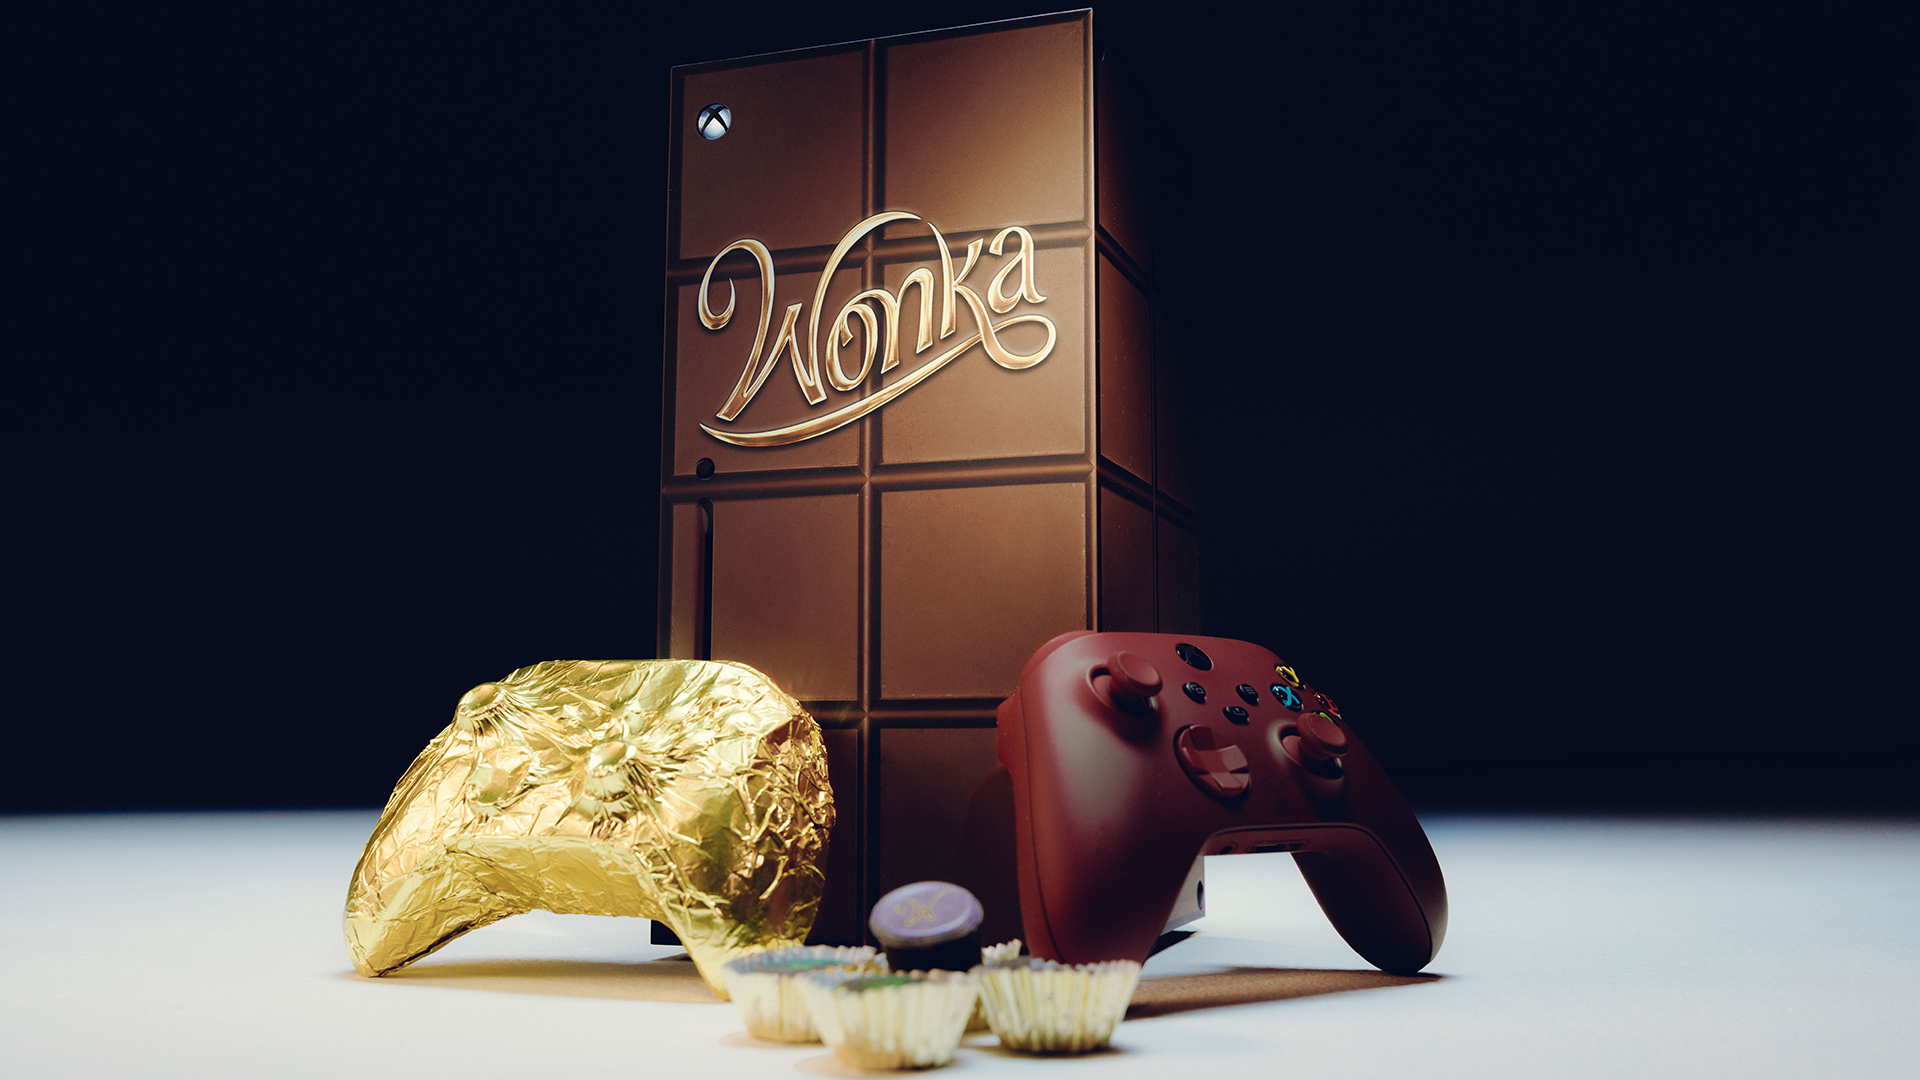 Wonka, Chocolat que c'est bon !